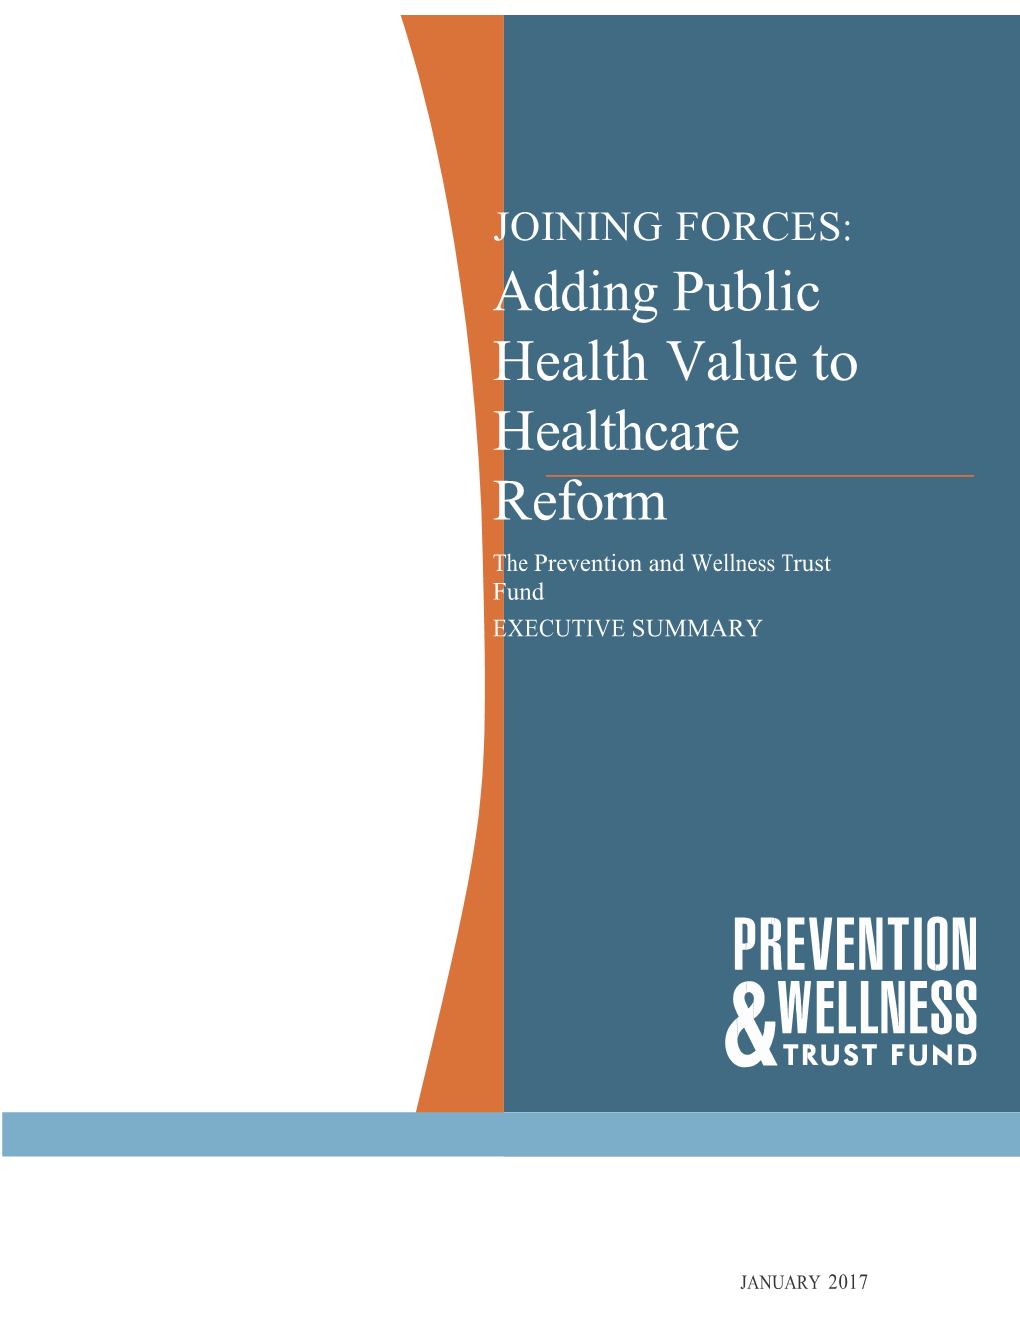 Adding Public Health Value to Healthcare Reform